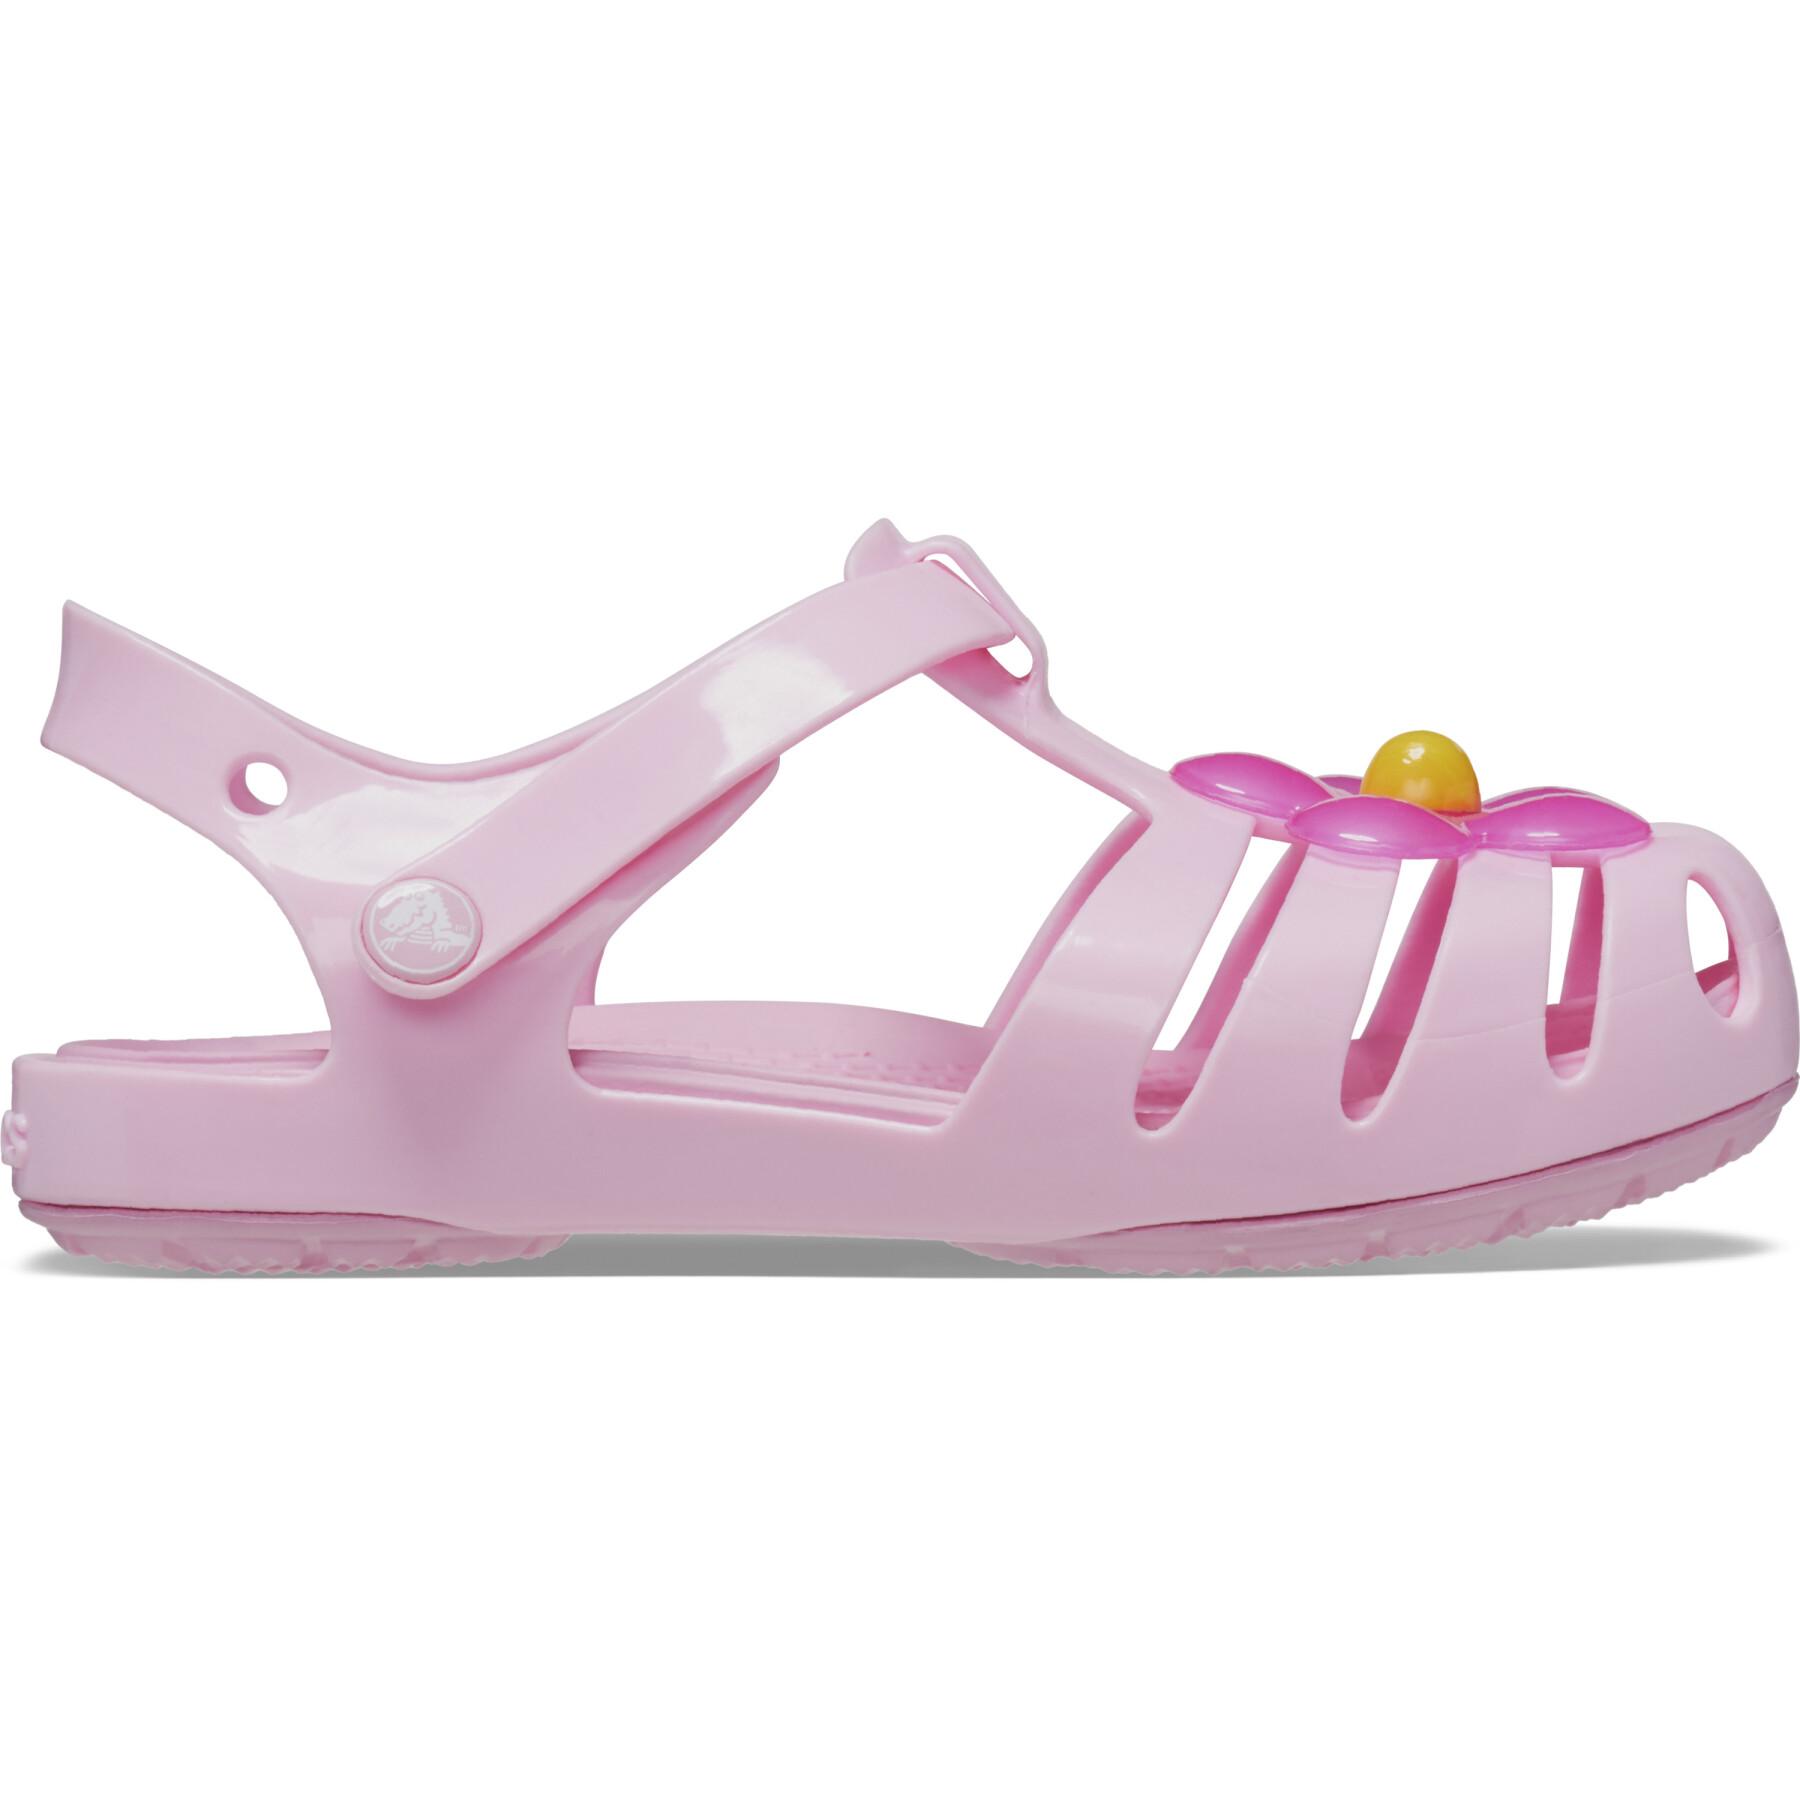 Buy Violet Sandals for Boys by CROCS Online | Ajio.com